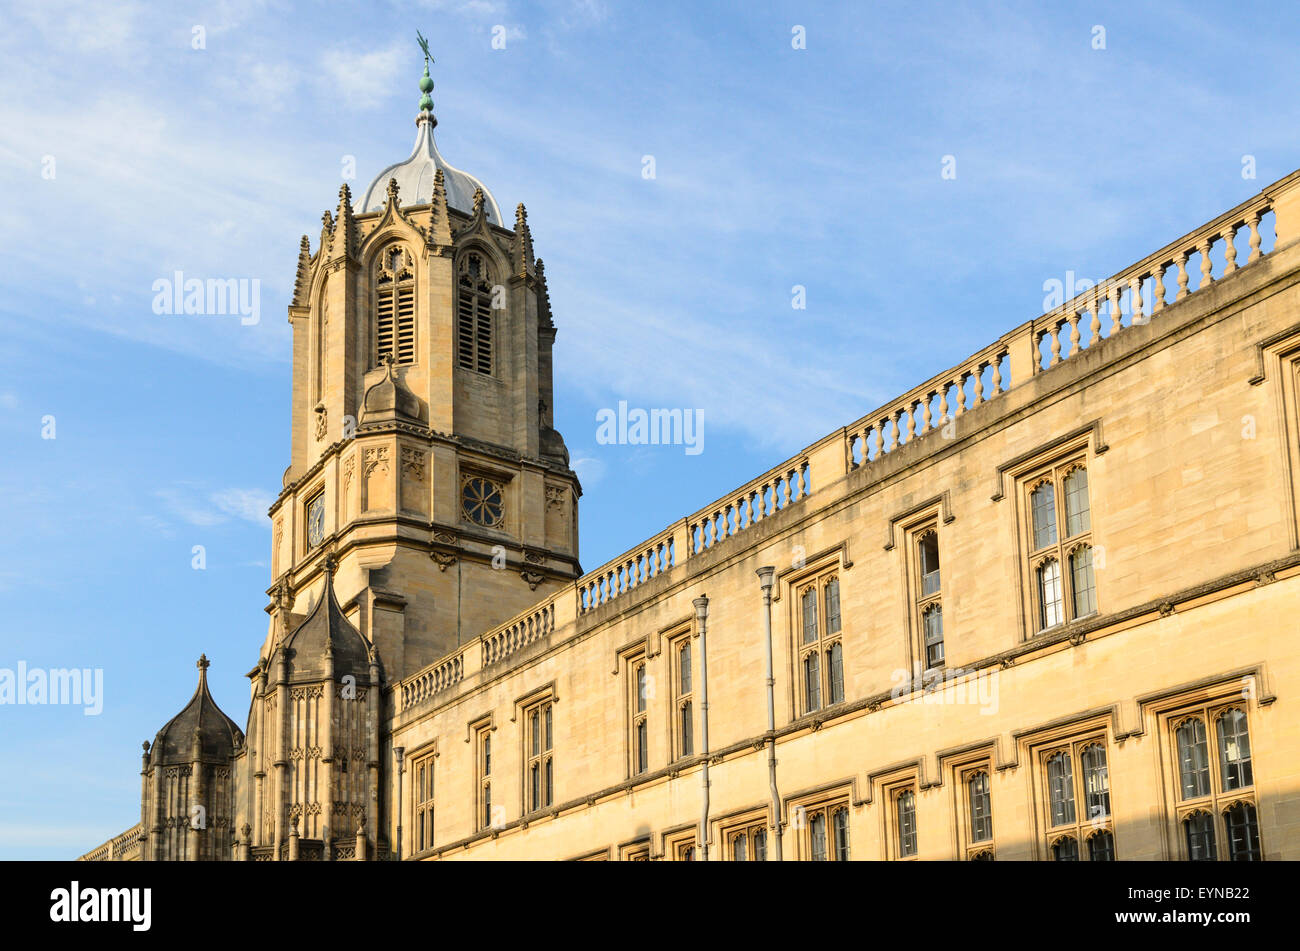 Tom Tower designed by Sir Christopher Wren, Christ Church, Oxford University, Oxford, England, UK. Stock Photo